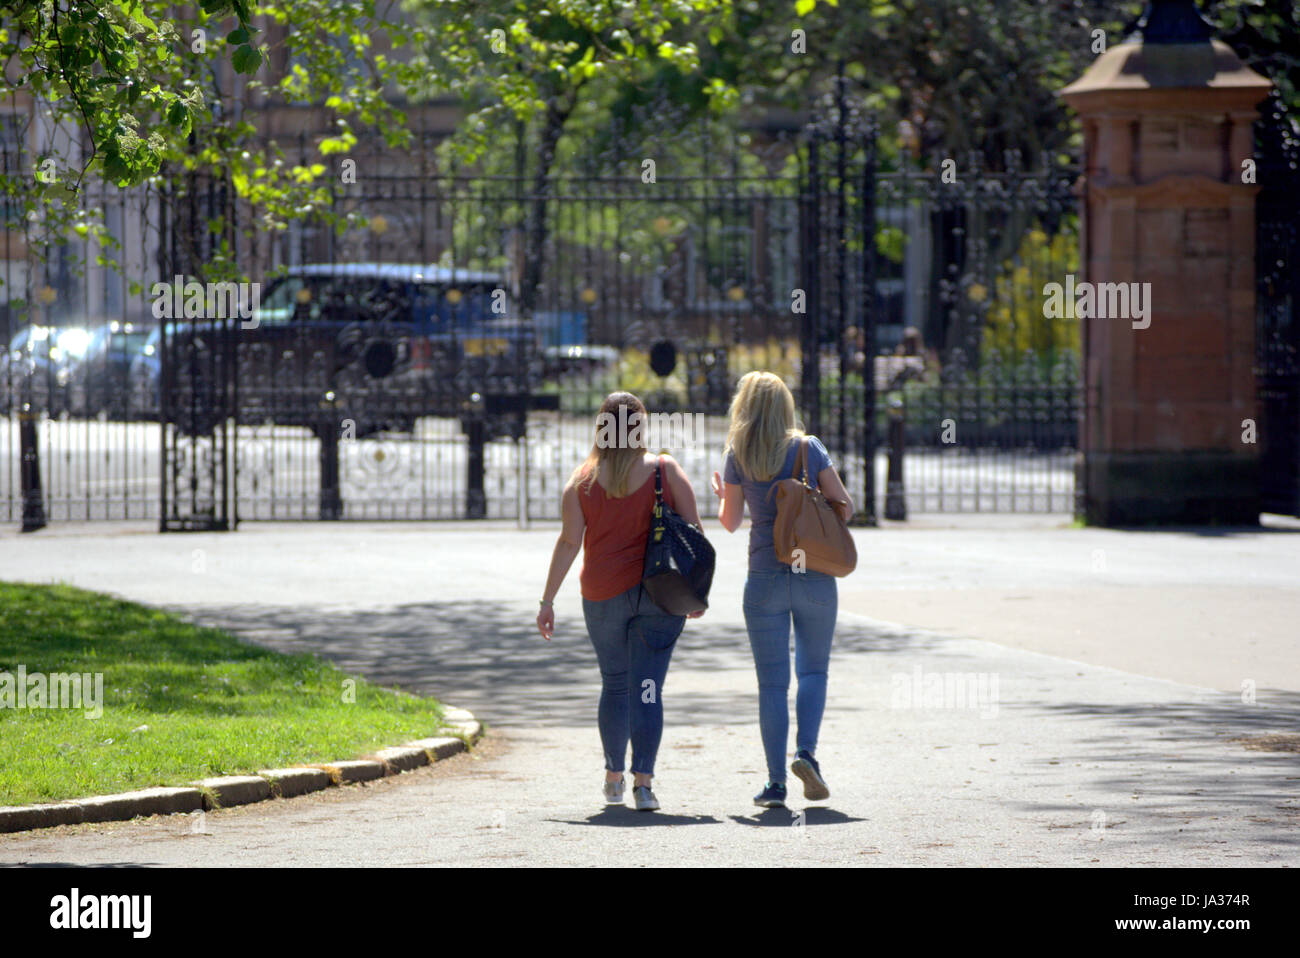 Glasgow Kelvingrove park scenes girls walking towards Victorian iron gates Stock Photo